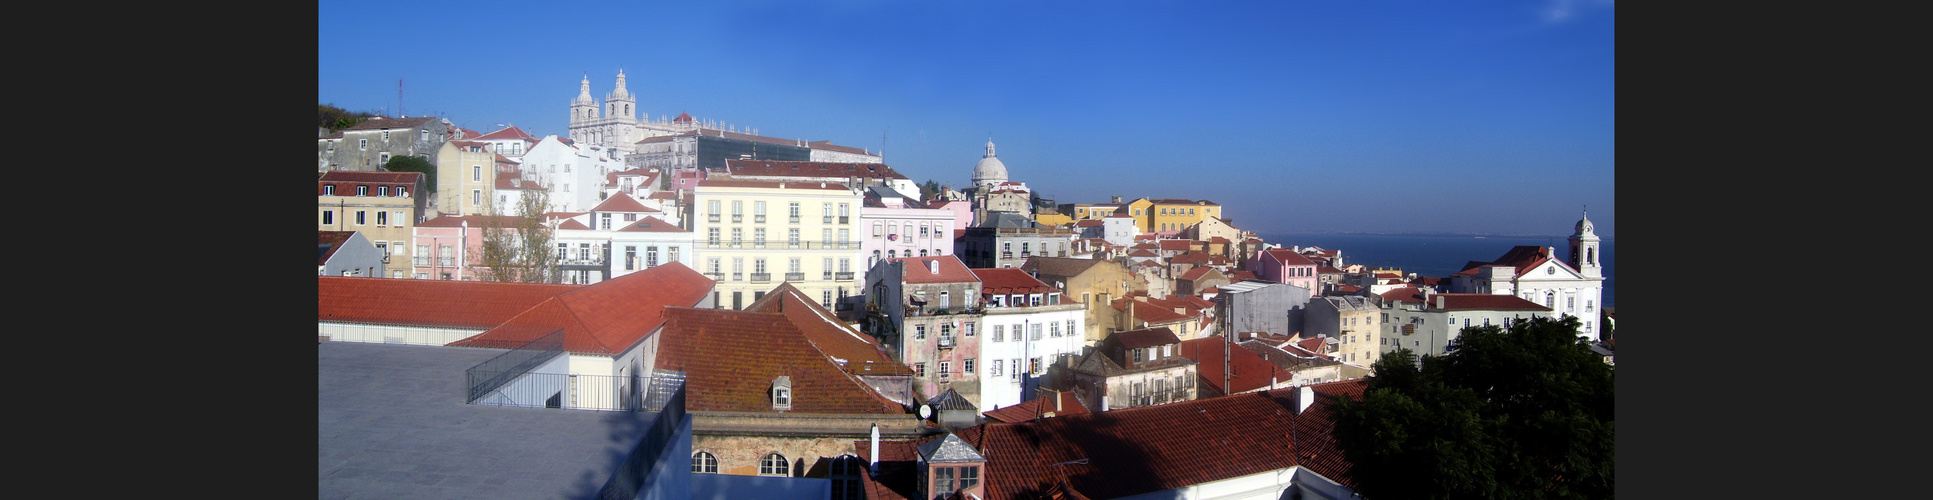 Lisboa: Der Stadtteil Alfama